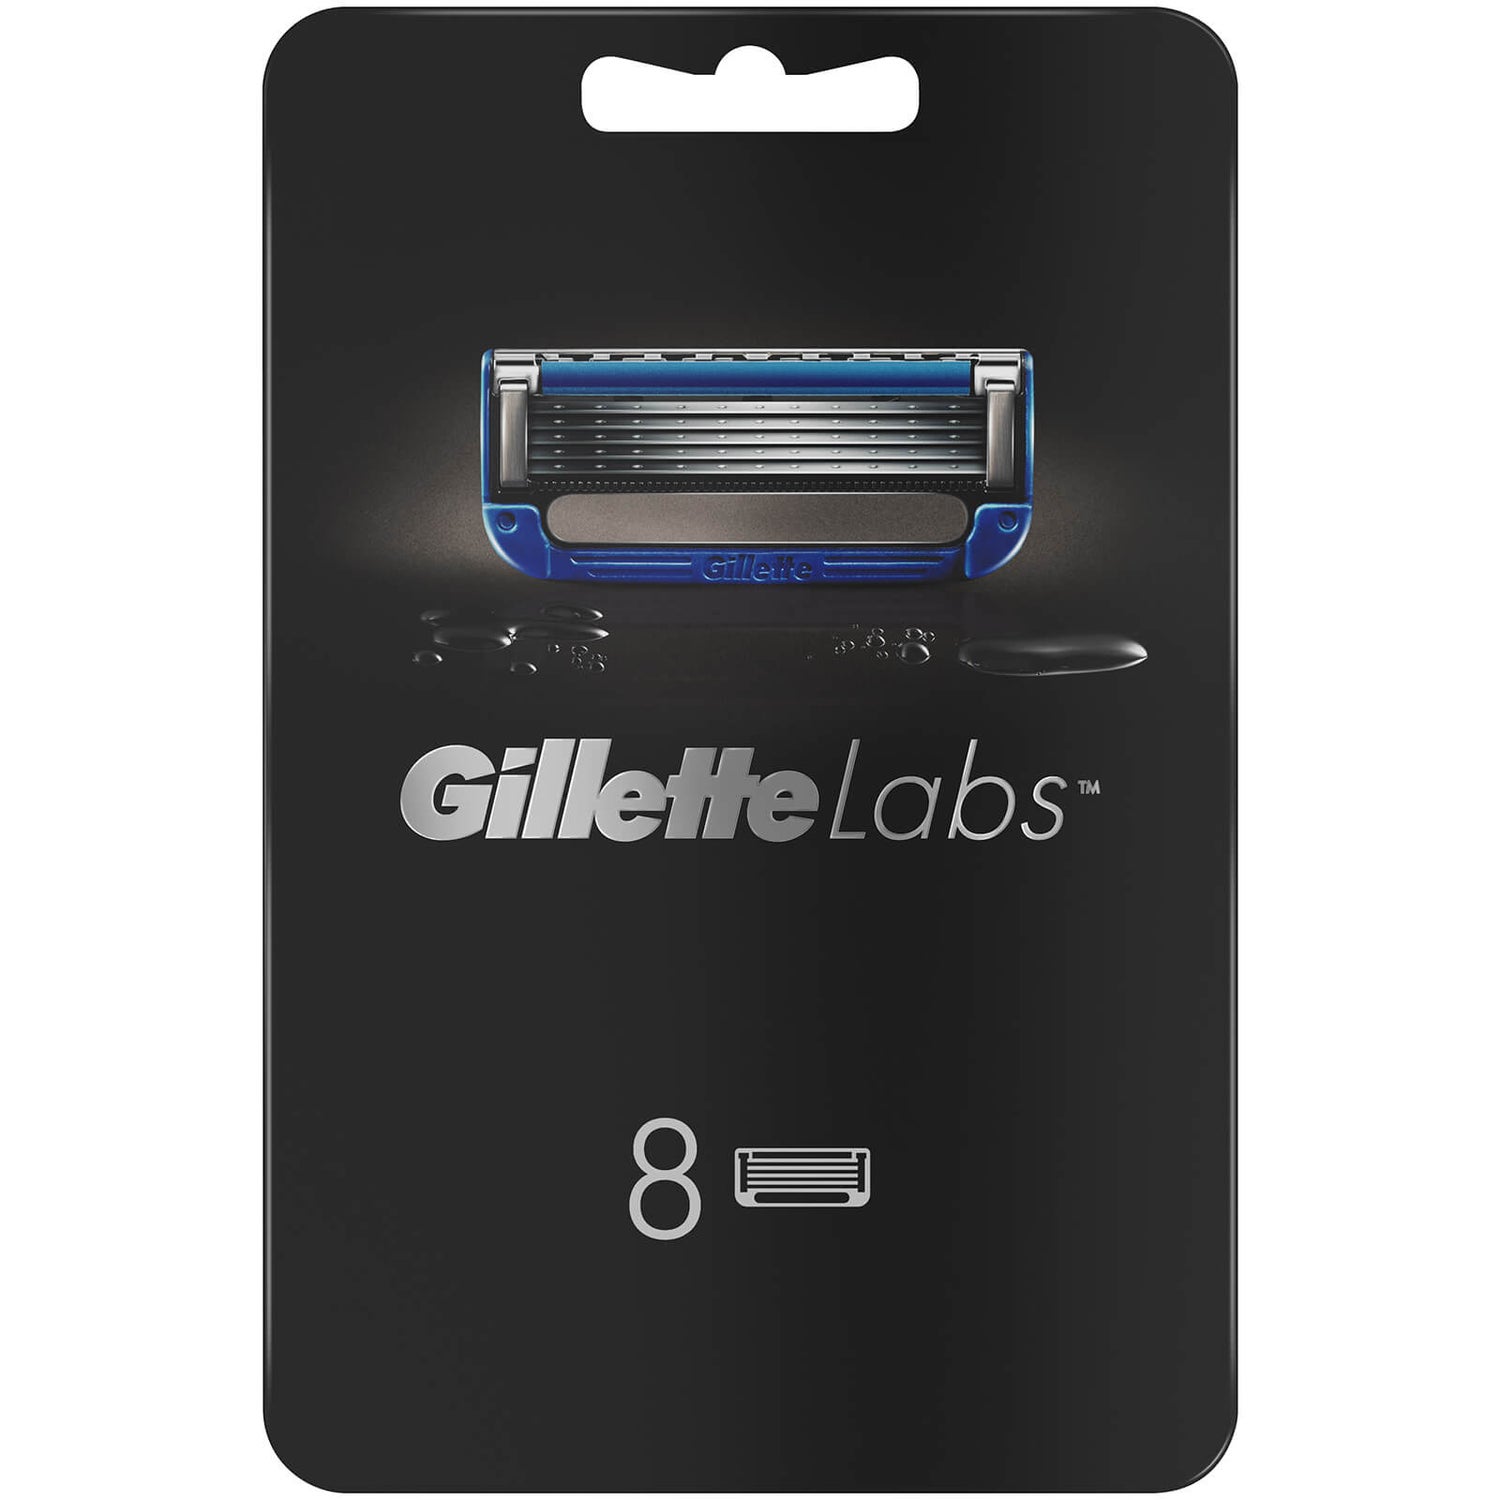 Gillette Labs Men's Heated Razor Blades - 8 Refills